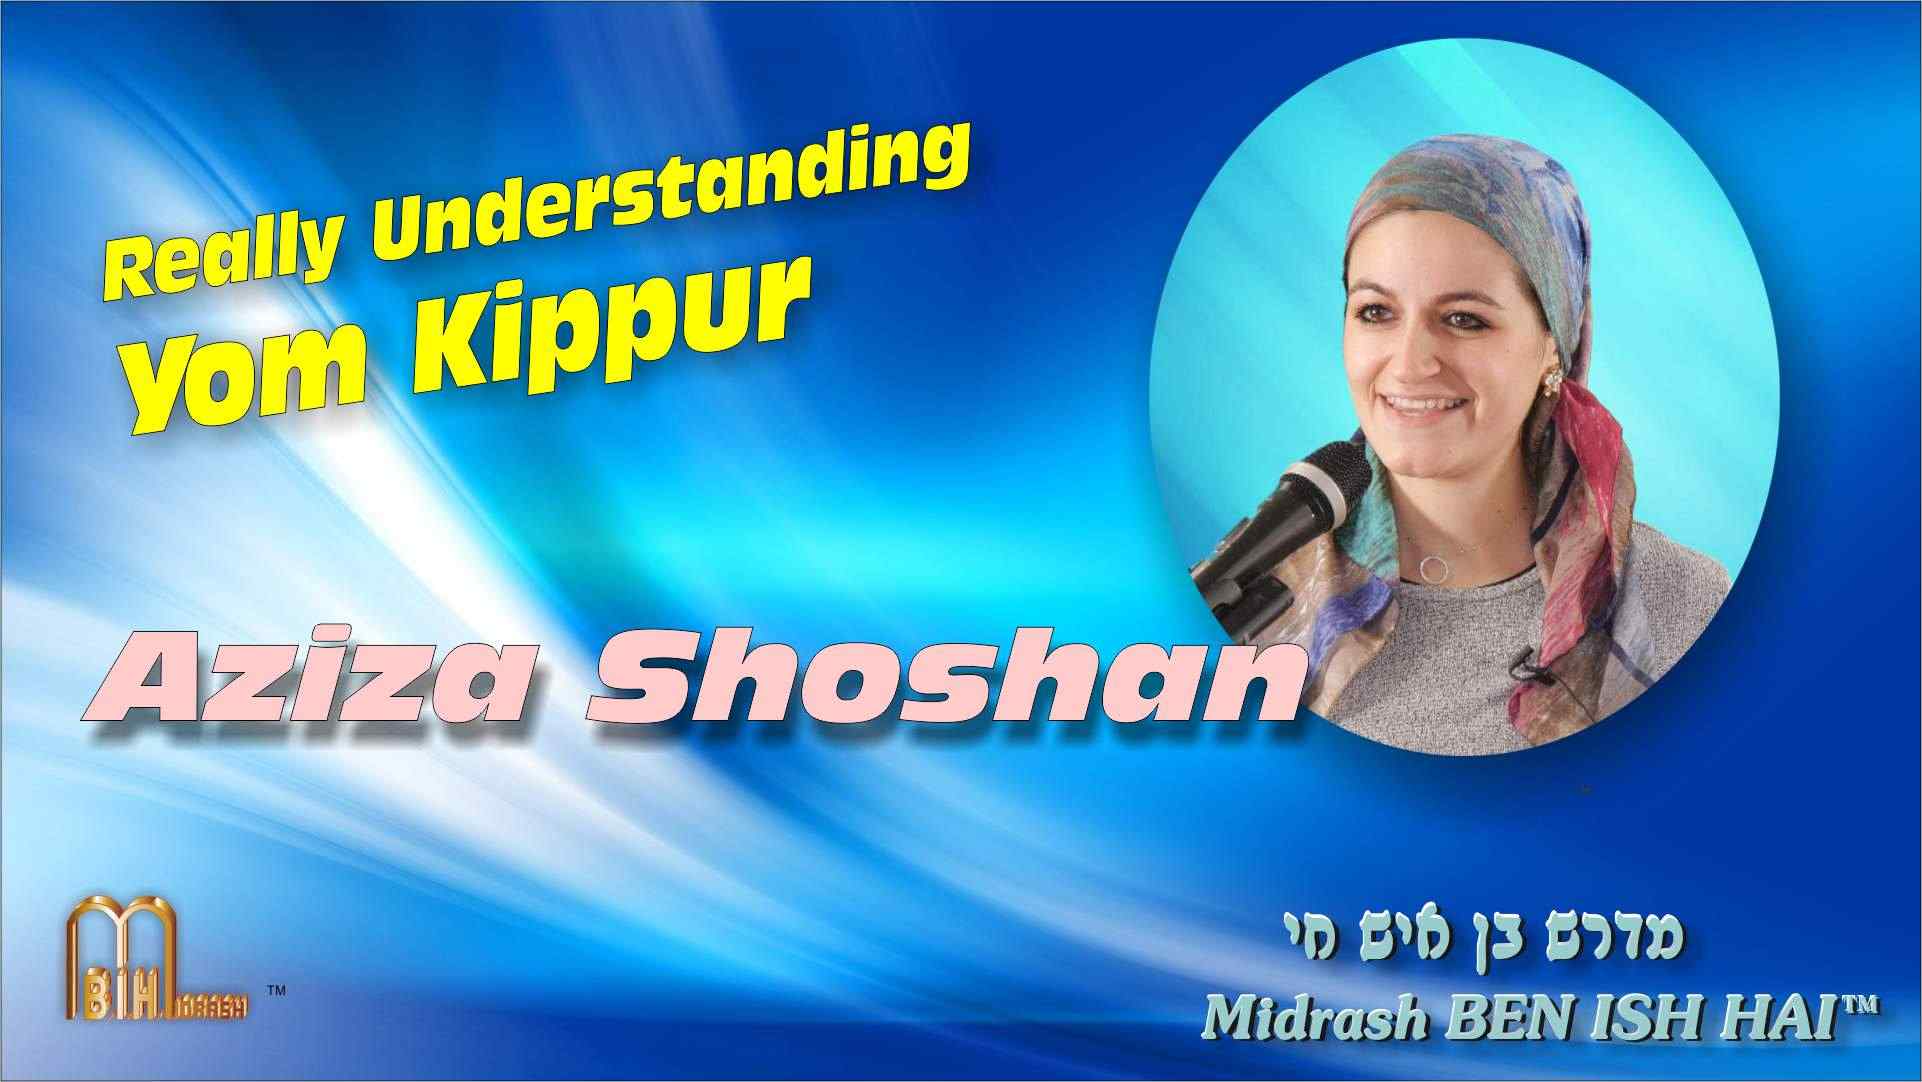 aziza-shoshan-really-understanding-yom-kippur